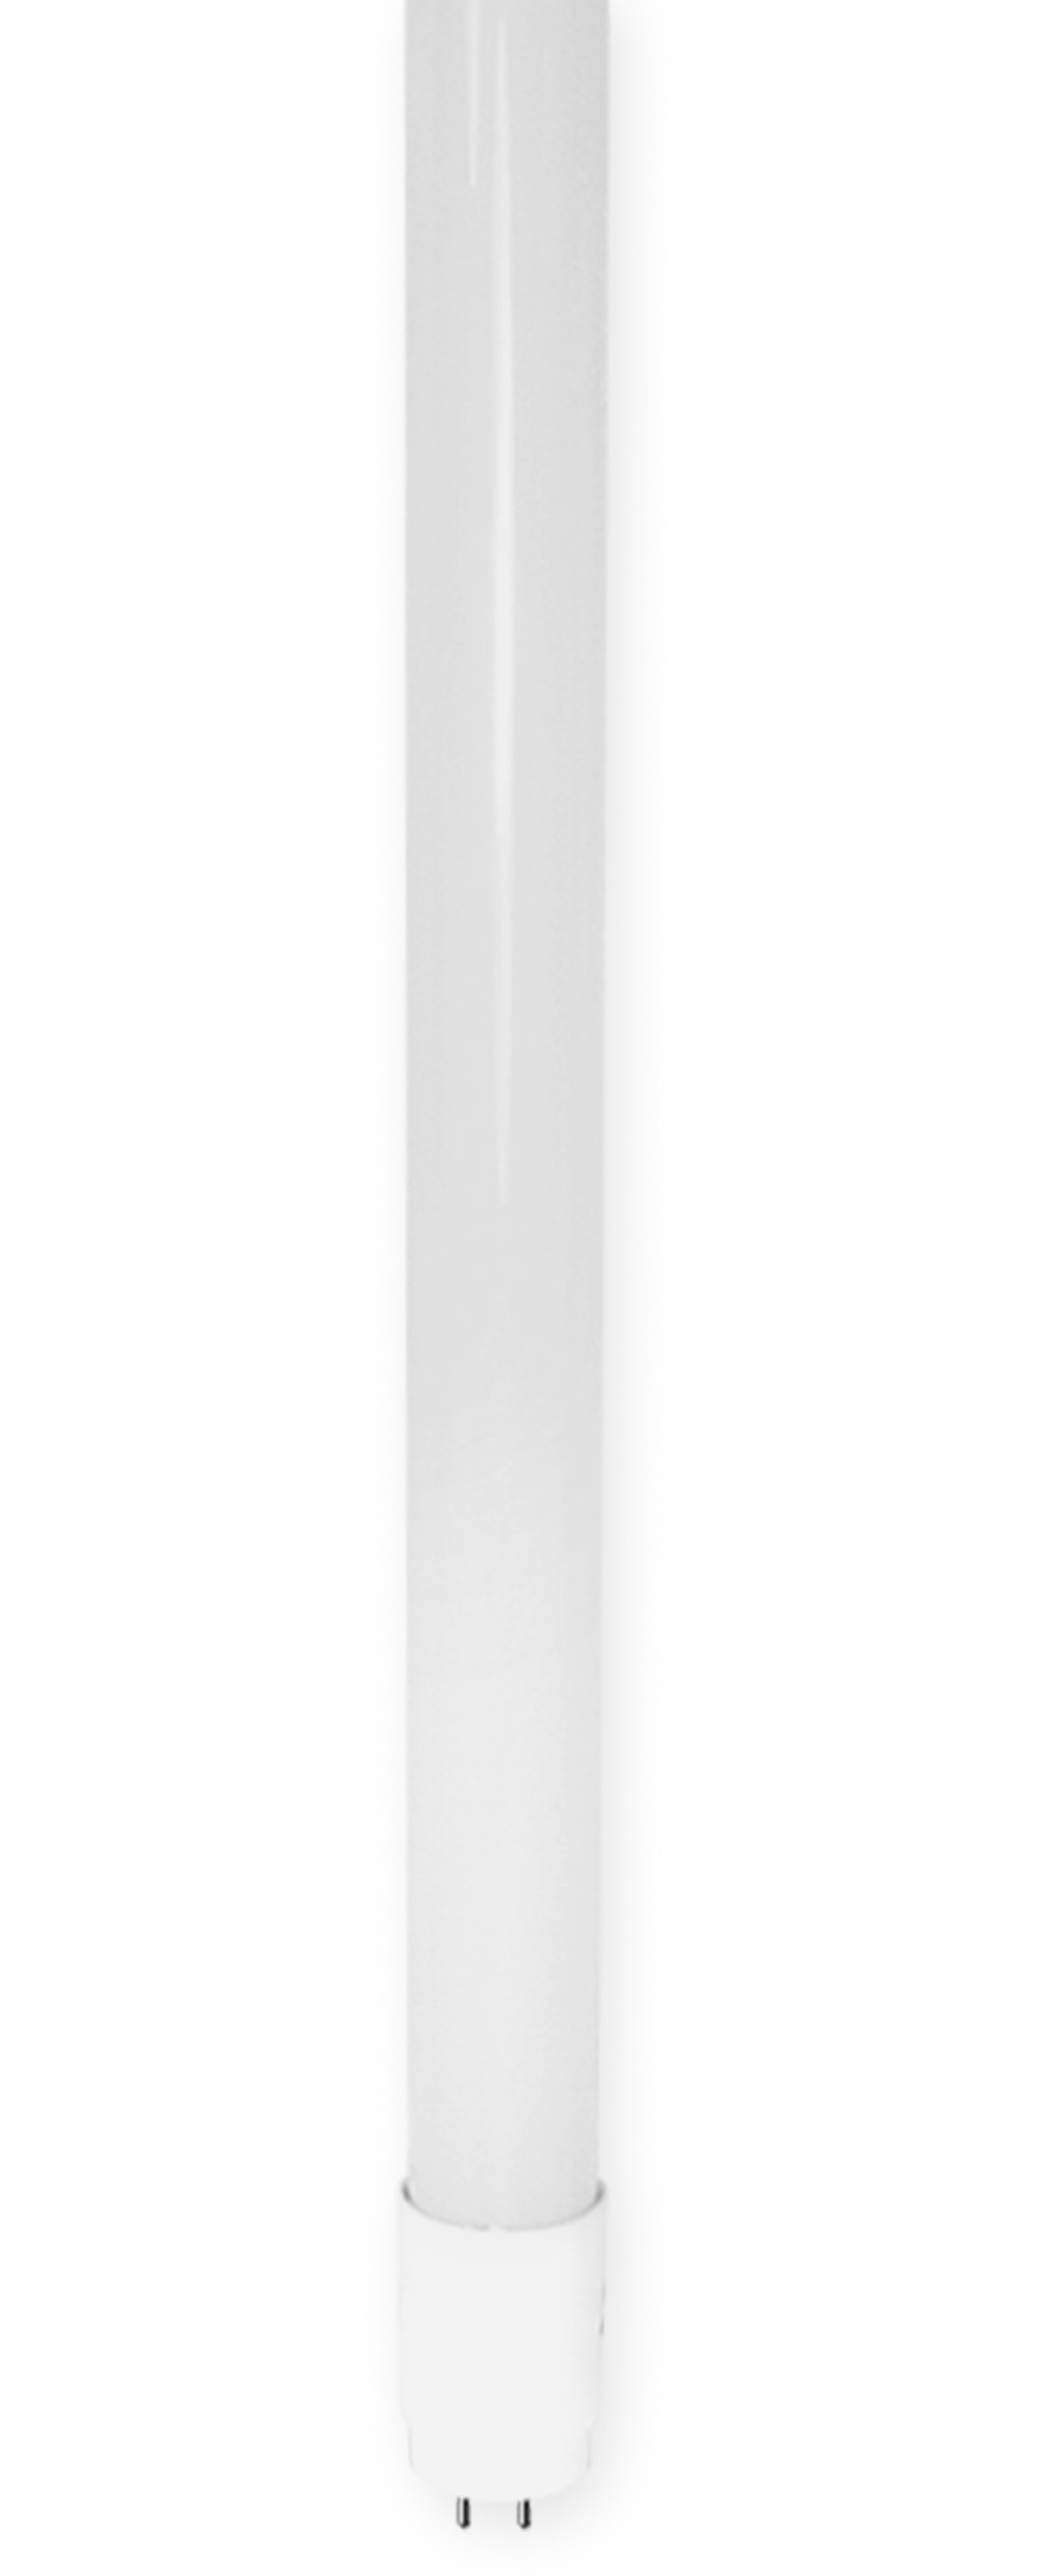 BLULAXA LED-Röhre 48195, EEK: F, 9 W, 950 lm, G13, 4000 K, 60 cm